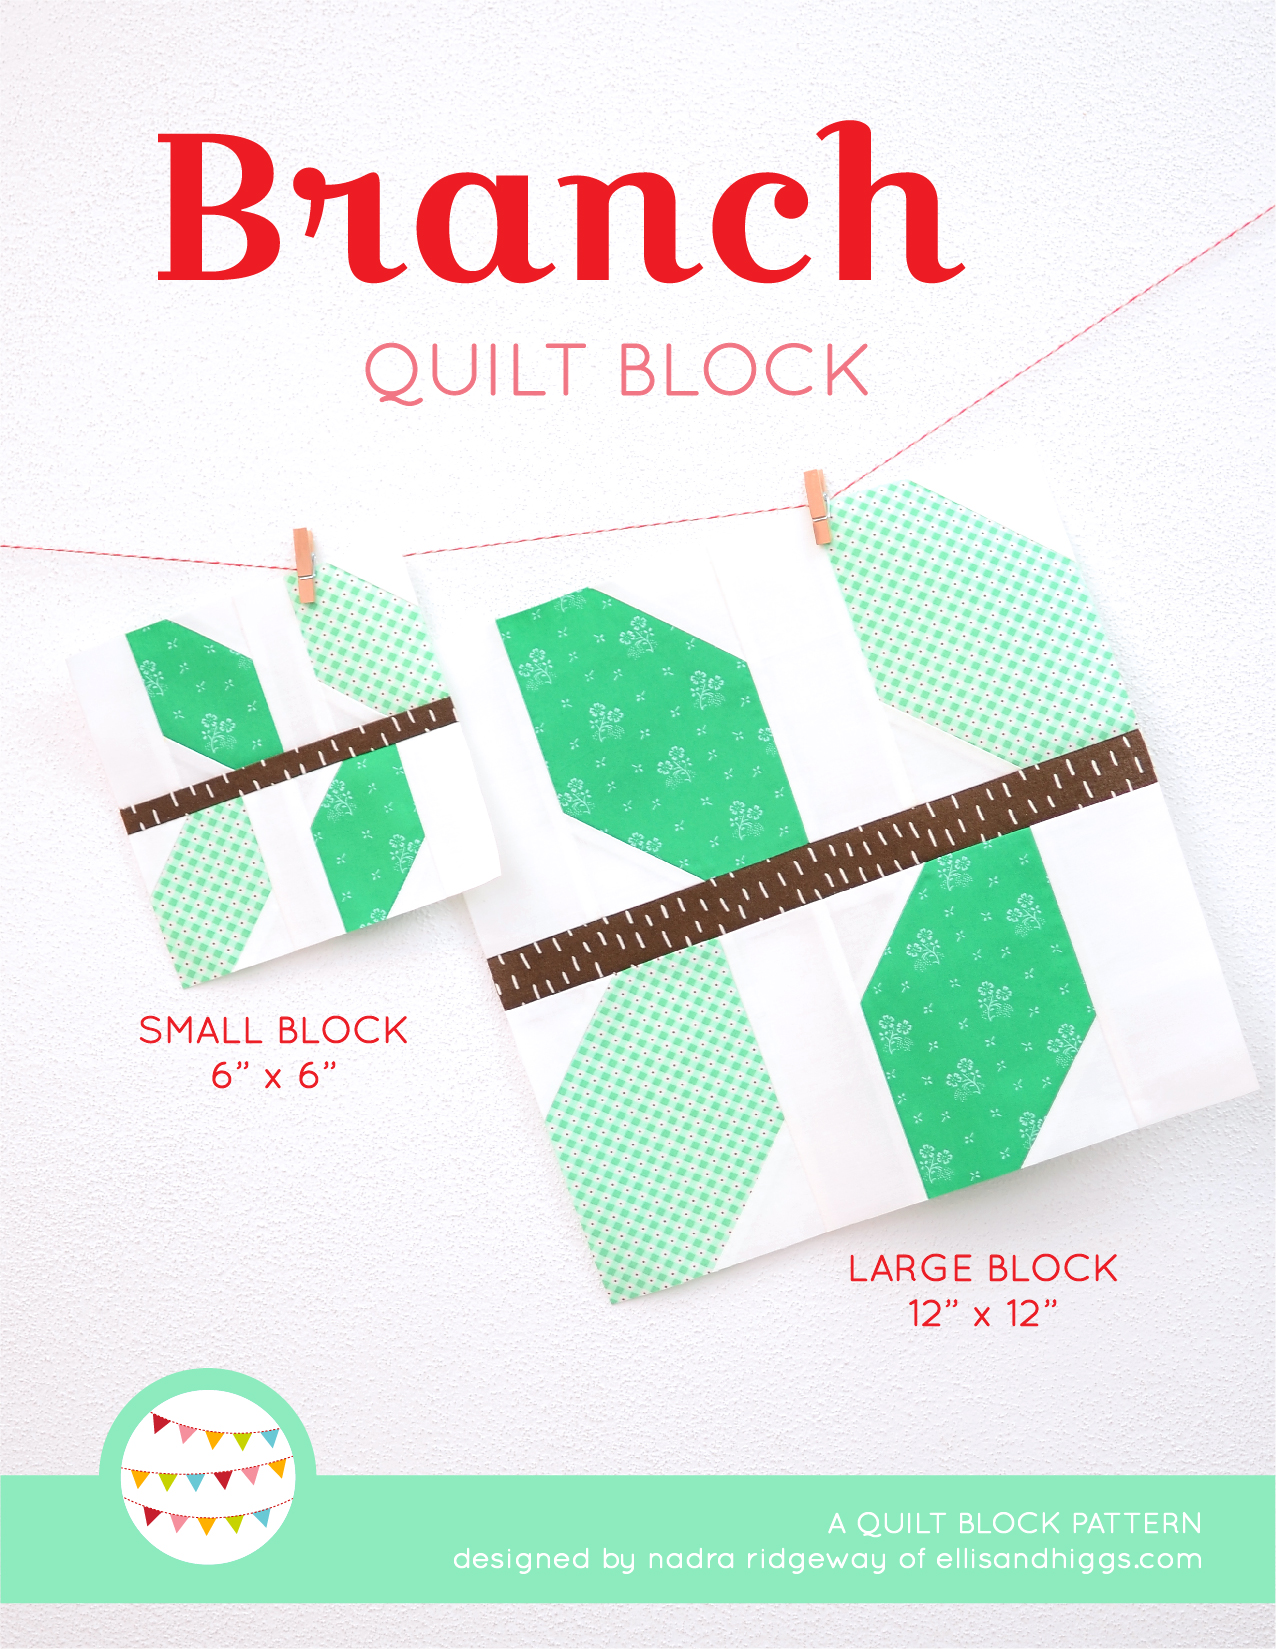 Branch quilt pattern - Spring quilt pattern